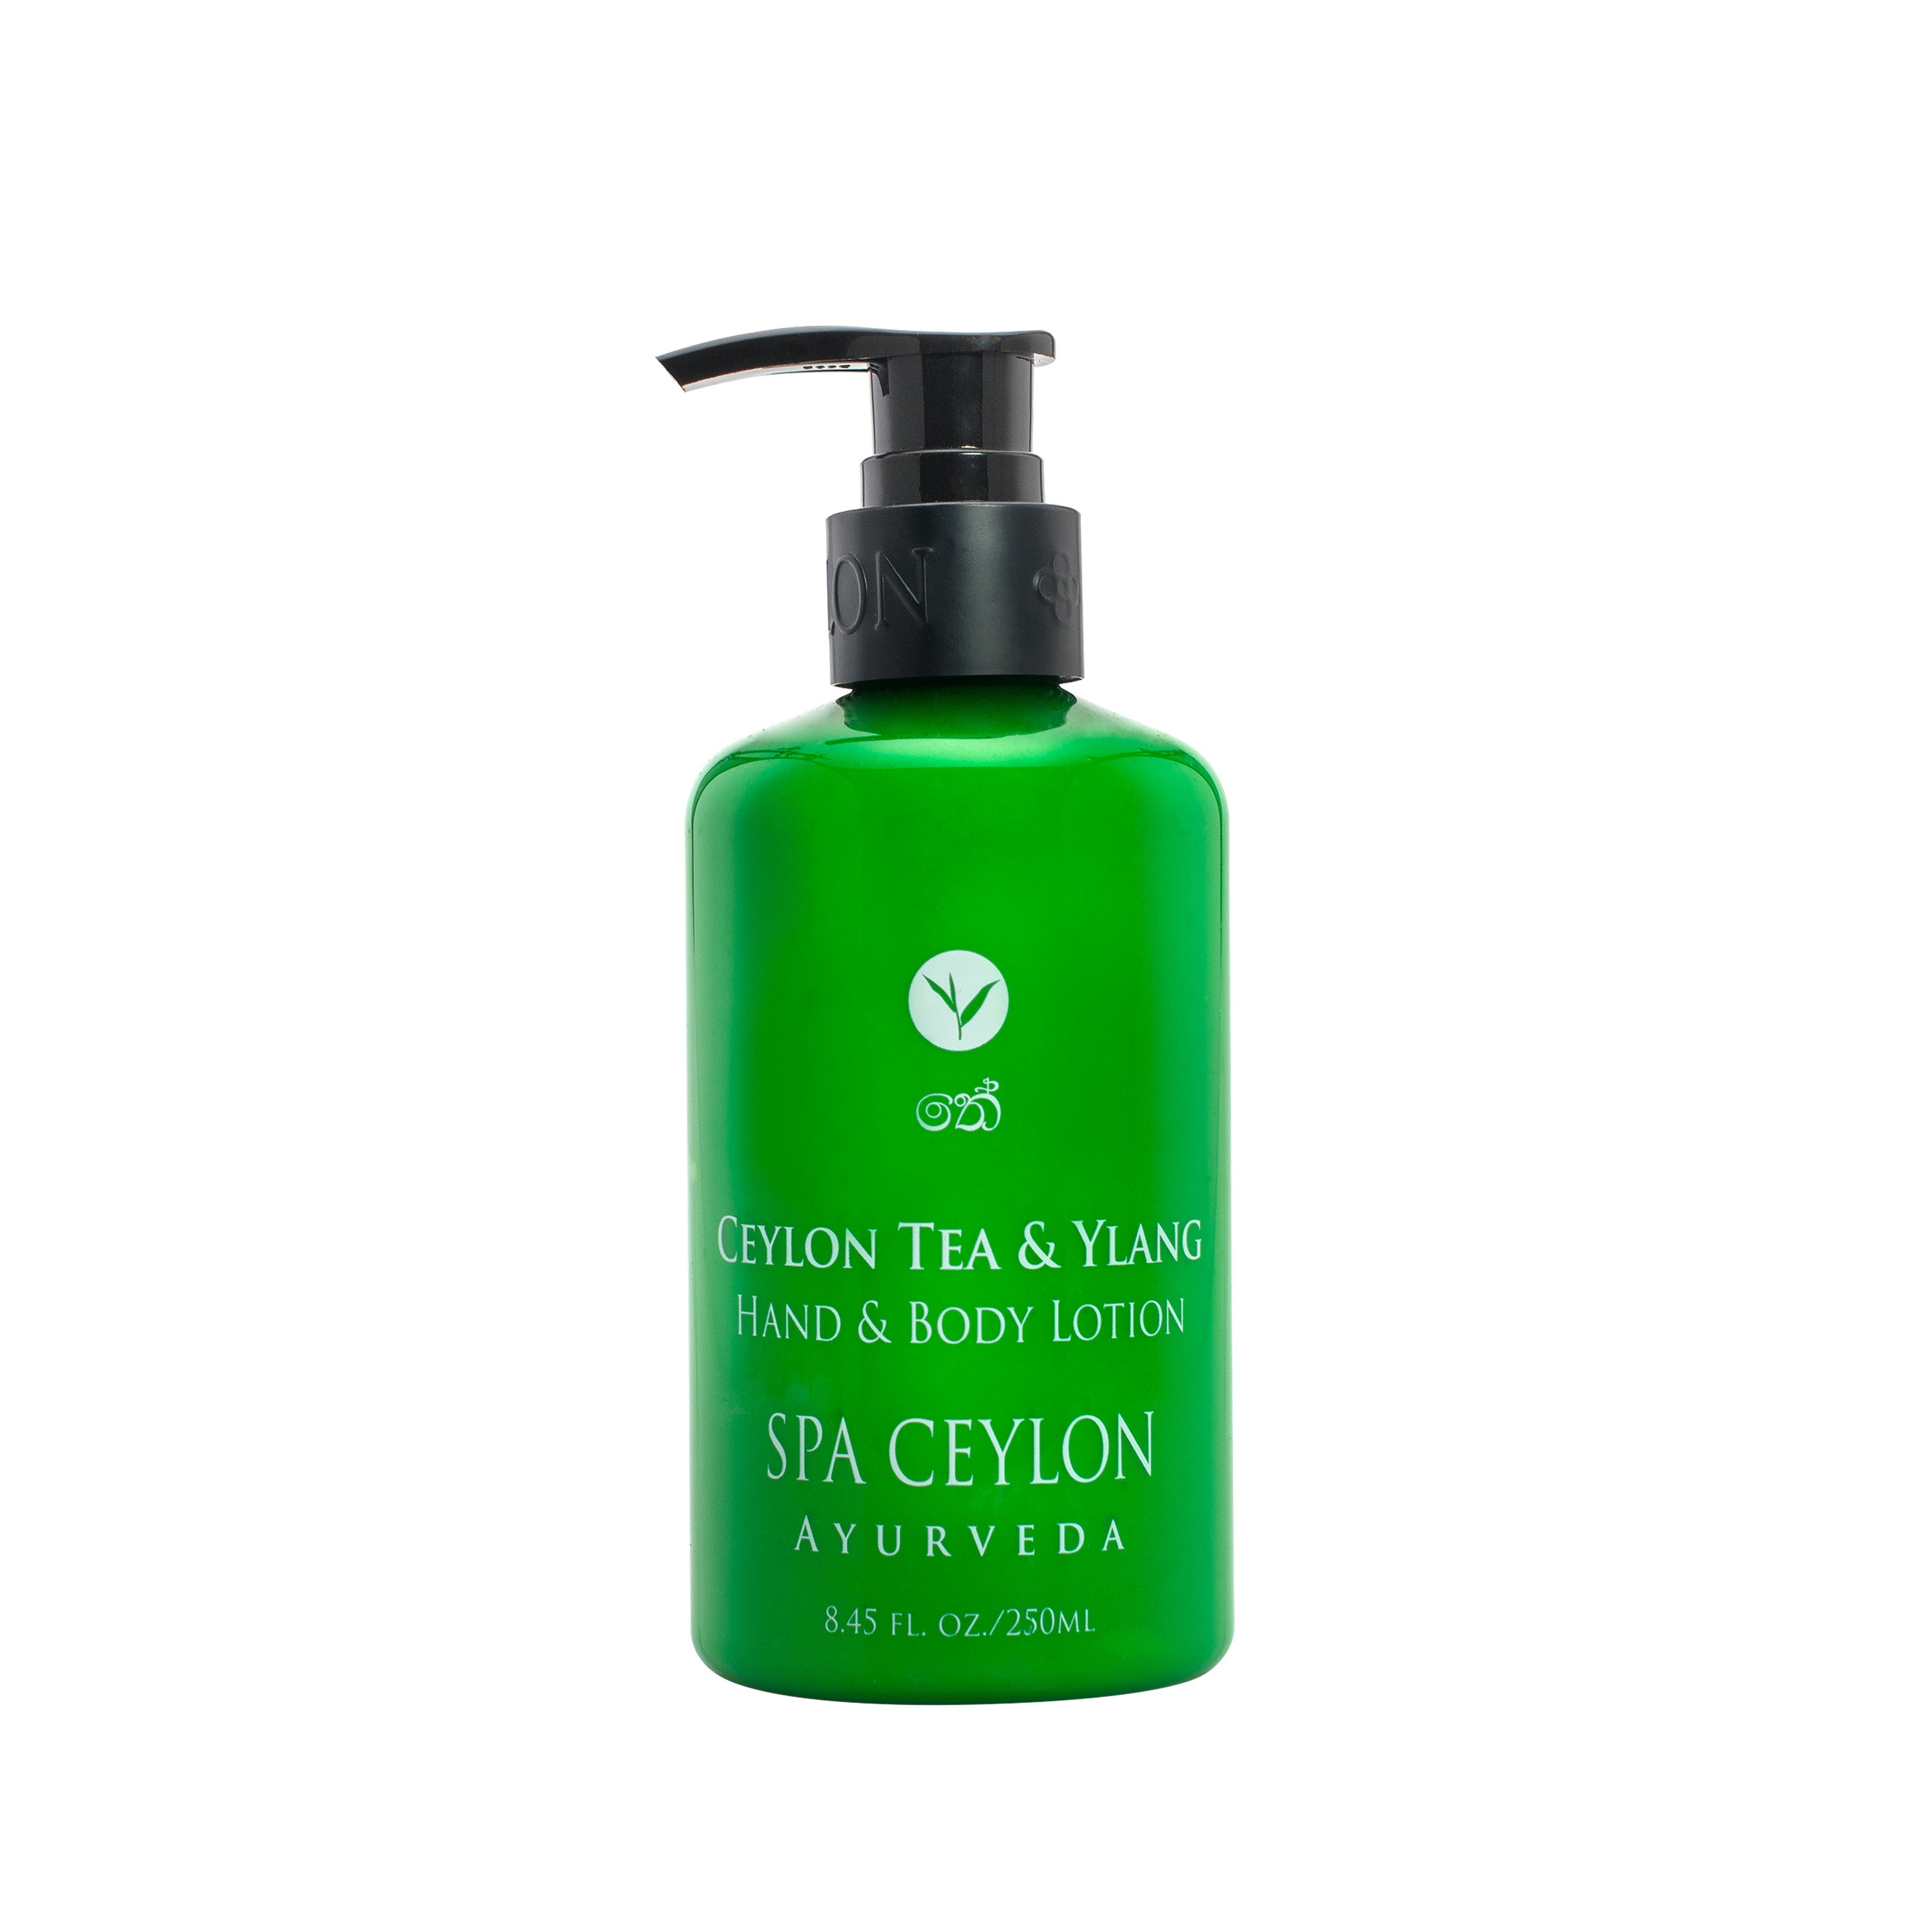 Ceylon Tea & Ylang - Hand & Body Lotion